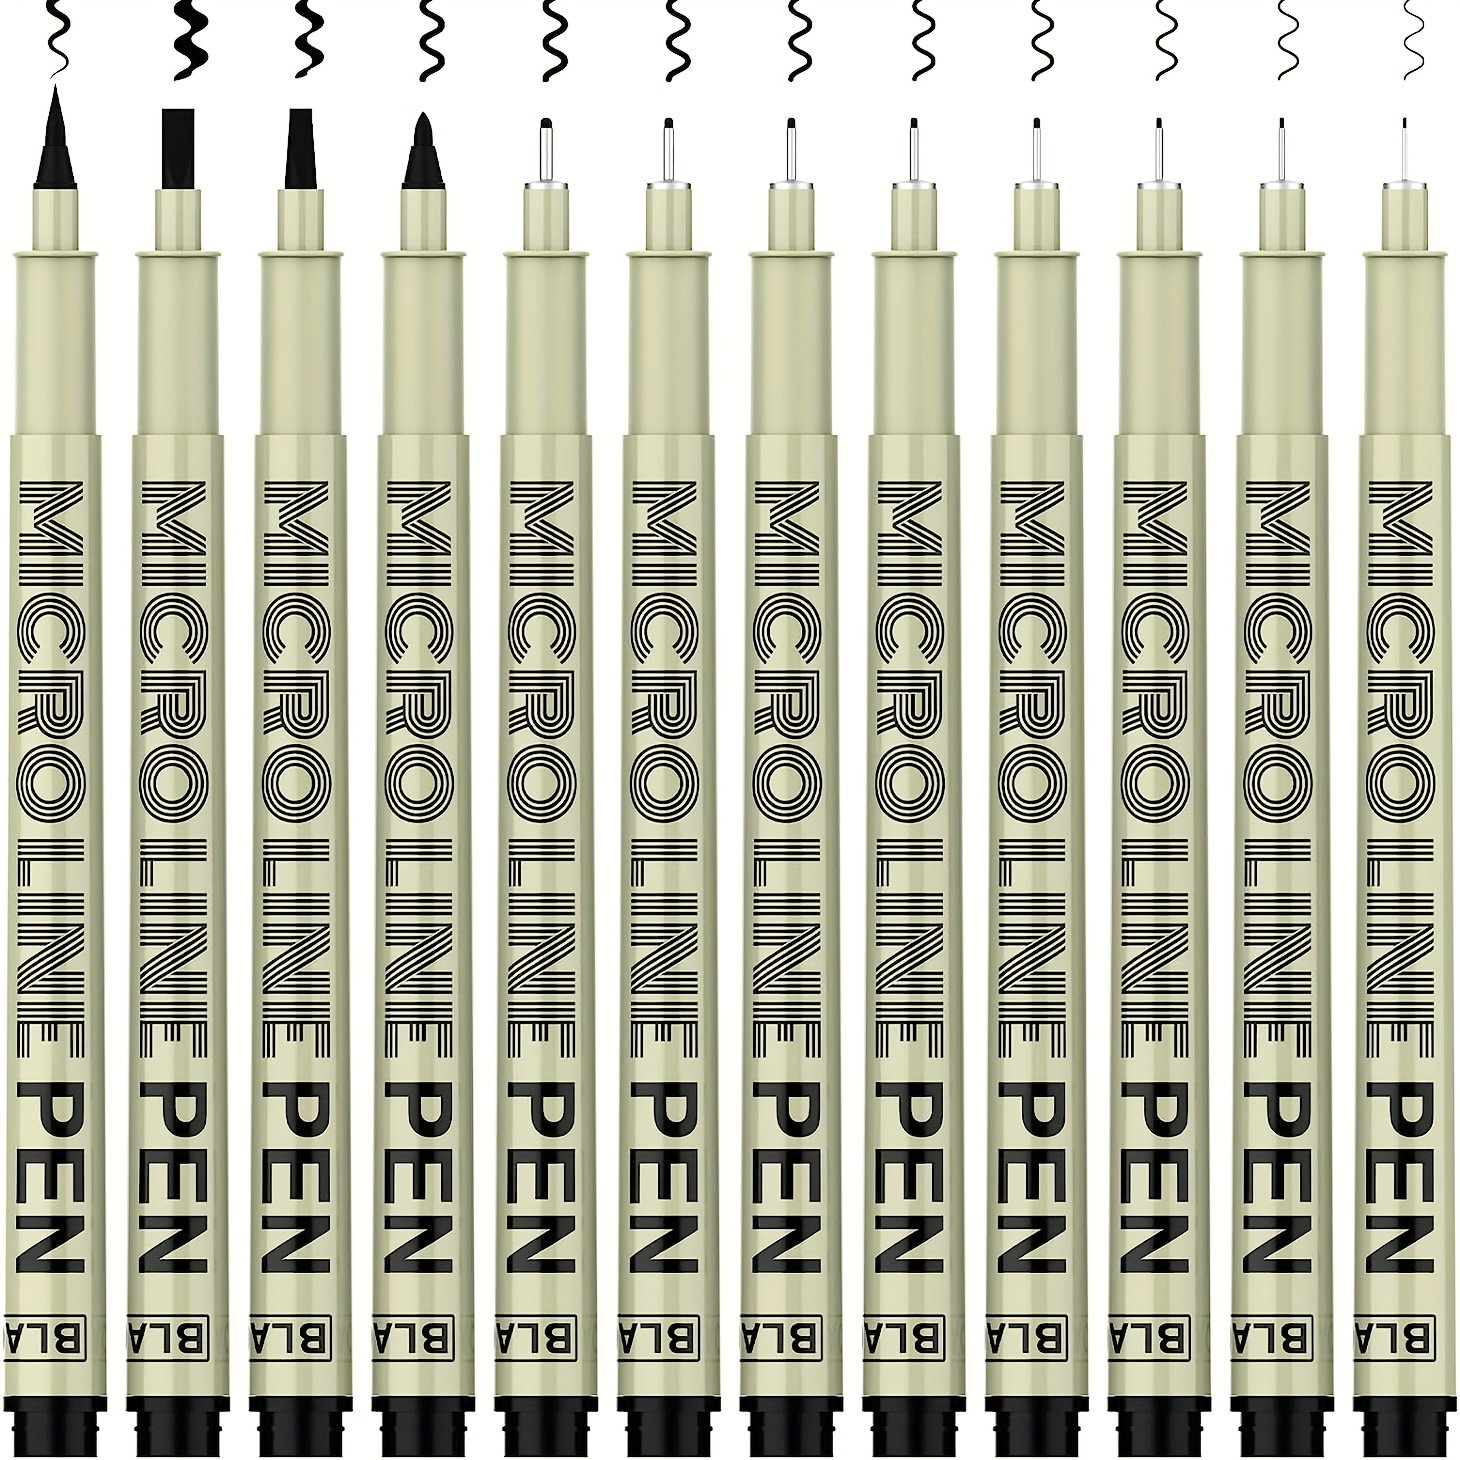 12pcs/set Micro-Pen Fineliner Ink Pens, Black Micro Fine Point Drawing Pens  Waterproof Archival Ink Multiliner Pens For Artist Illustration, Sketching